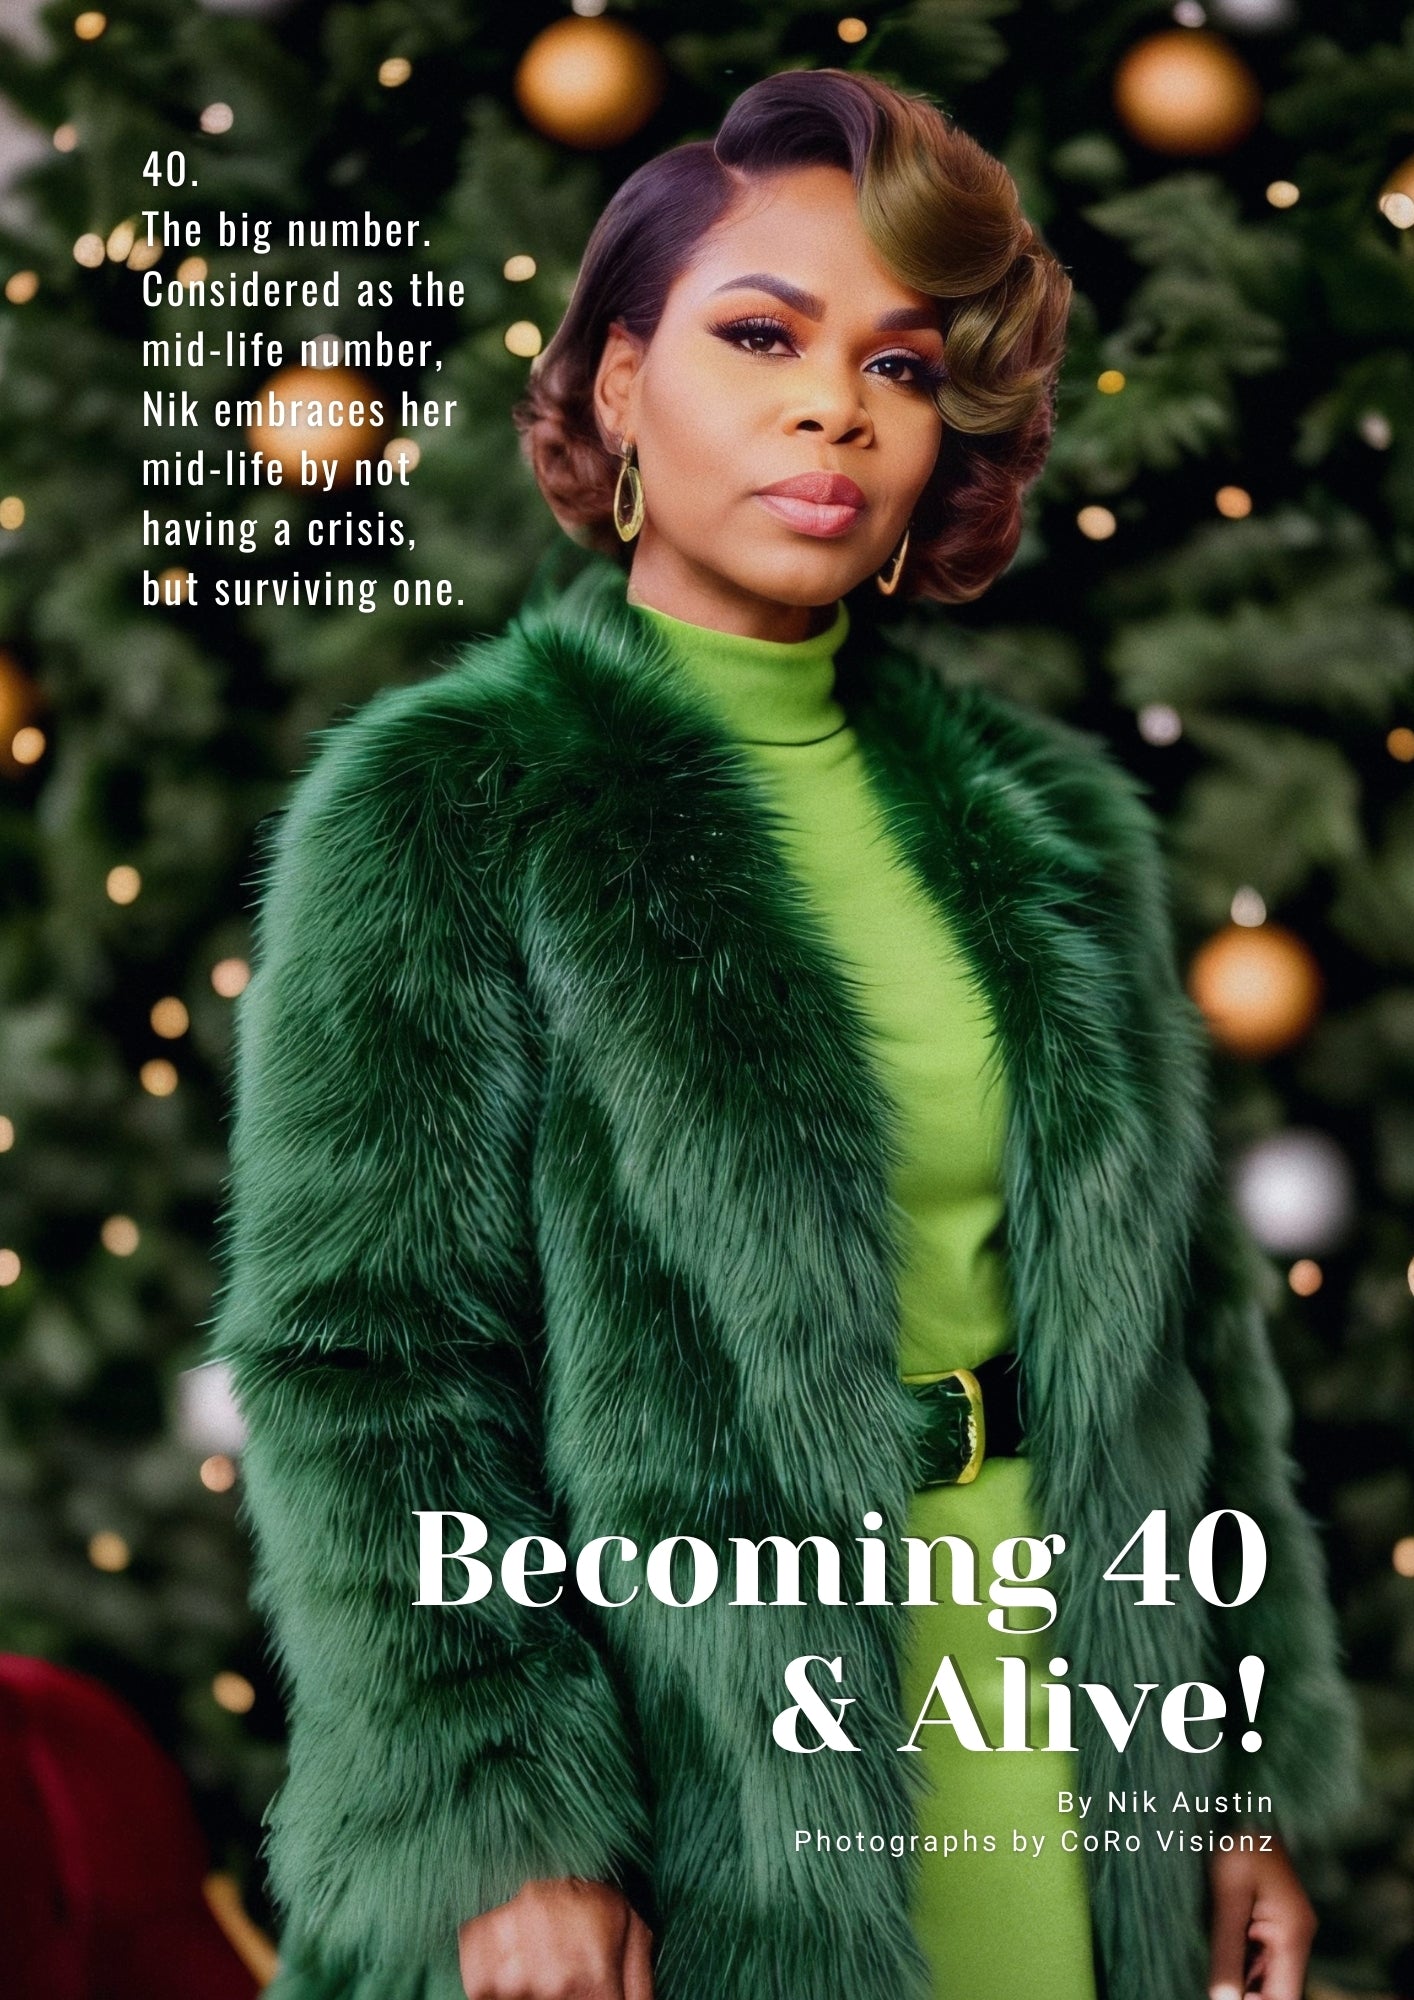 CoRoNista Magazine • January 2024 • Issue 13